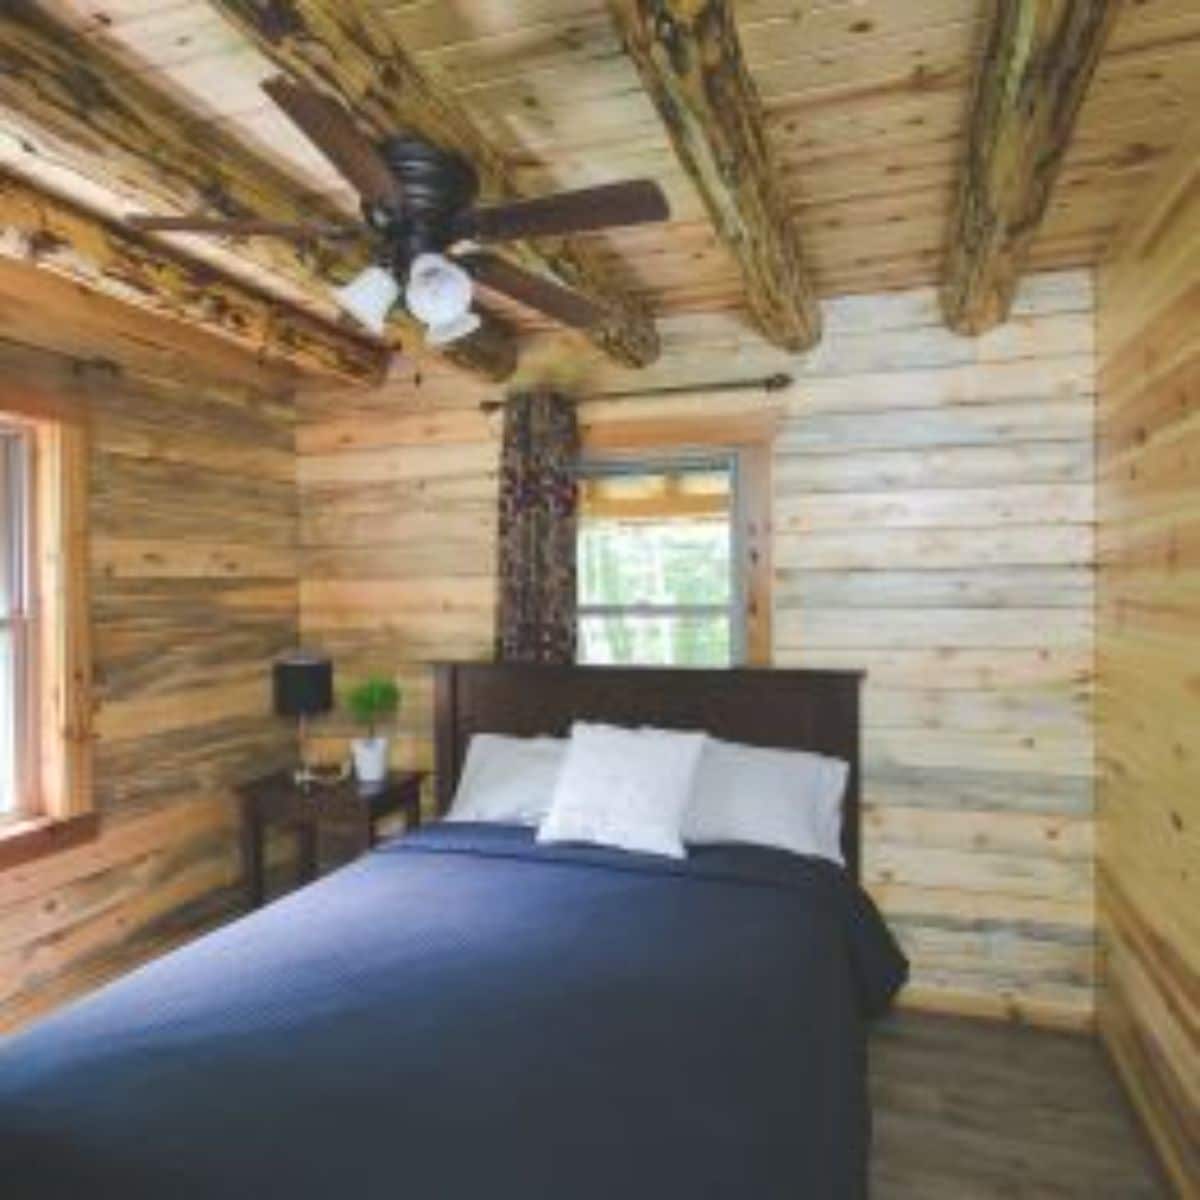 blue bedding on main floor log cabin bedroom